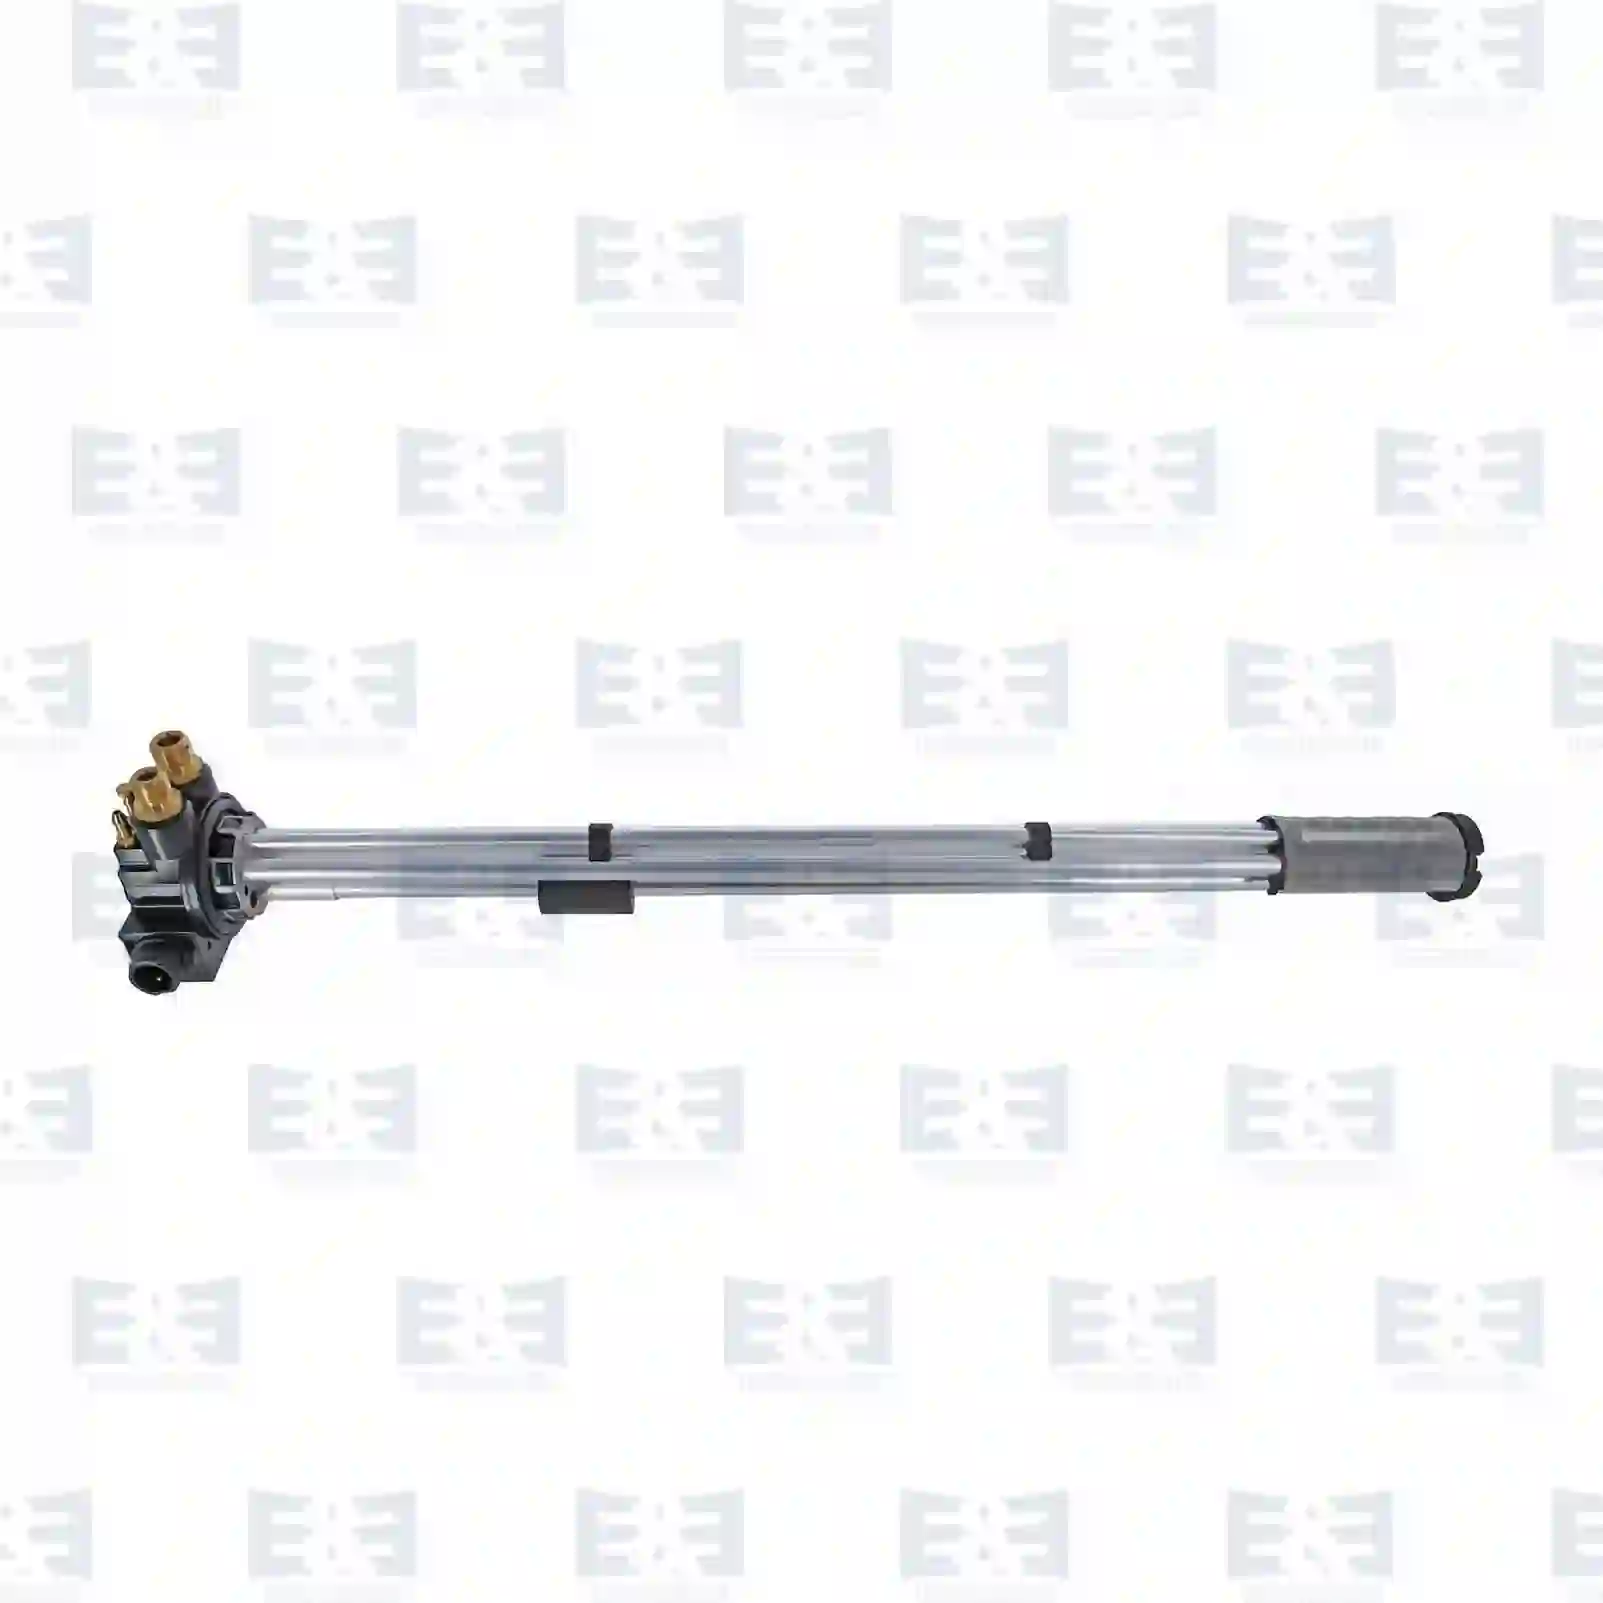 Fuel level sensor, 2E2287424, 1078990, 1079182, 20375003, 20375011, 20492526, 20732301, 3172551, 3943102, 3962657, 8144007, 8144008, ZG10024-0008 ||  2E2287424 E&E Truck Spare Parts | Truck Spare Parts, Auotomotive Spare Parts Fuel level sensor, 2E2287424, 1078990, 1079182, 20375003, 20375011, 20492526, 20732301, 3172551, 3943102, 3962657, 8144007, 8144008, ZG10024-0008 ||  2E2287424 E&E Truck Spare Parts | Truck Spare Parts, Auotomotive Spare Parts